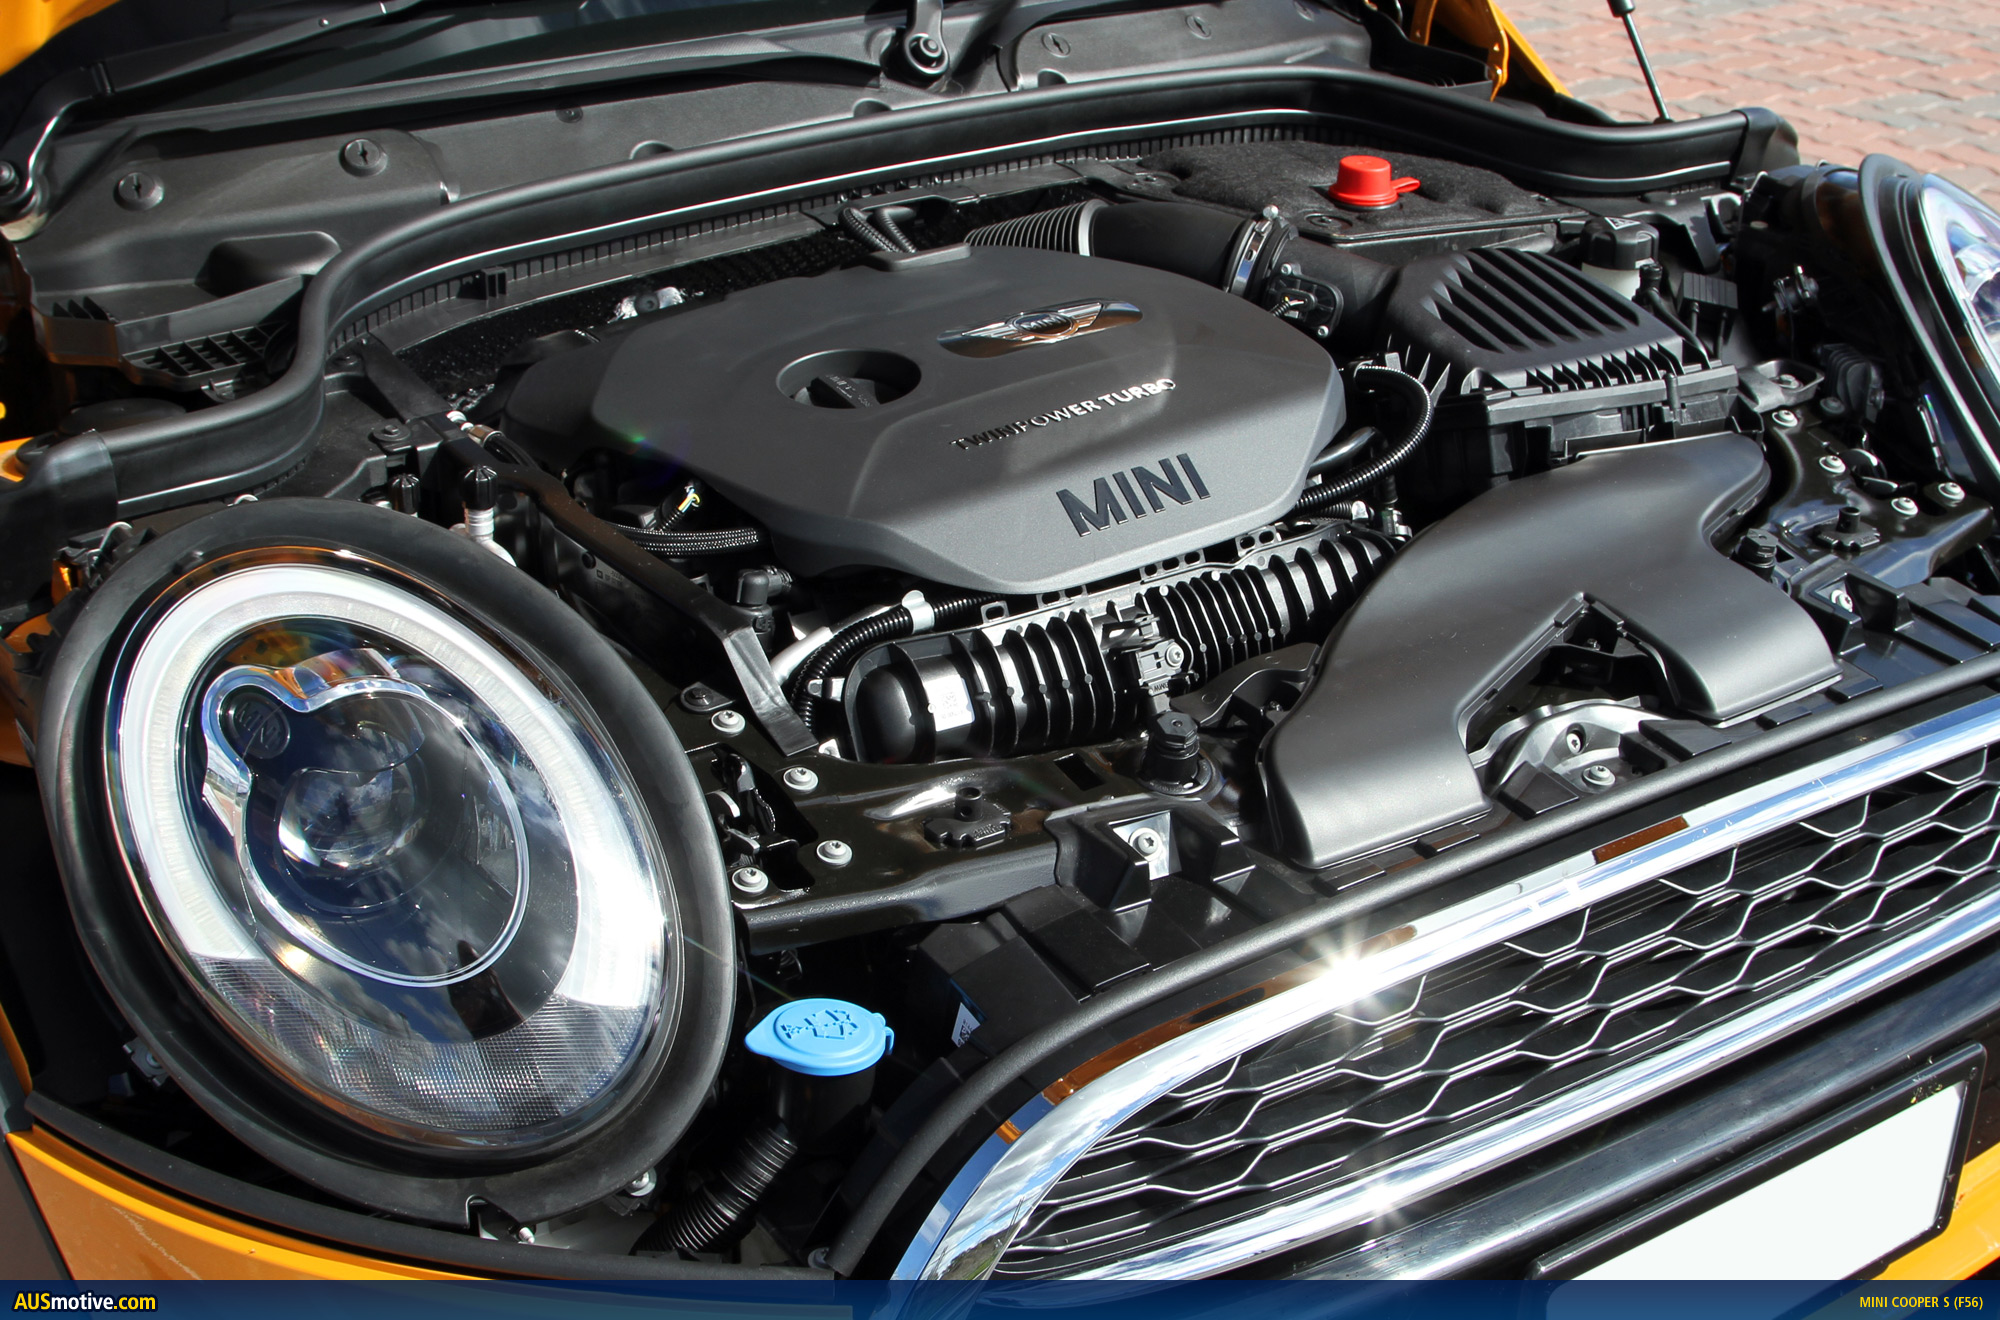 Drive Thru: F56 MINI Cooper S – AUSmotive.com